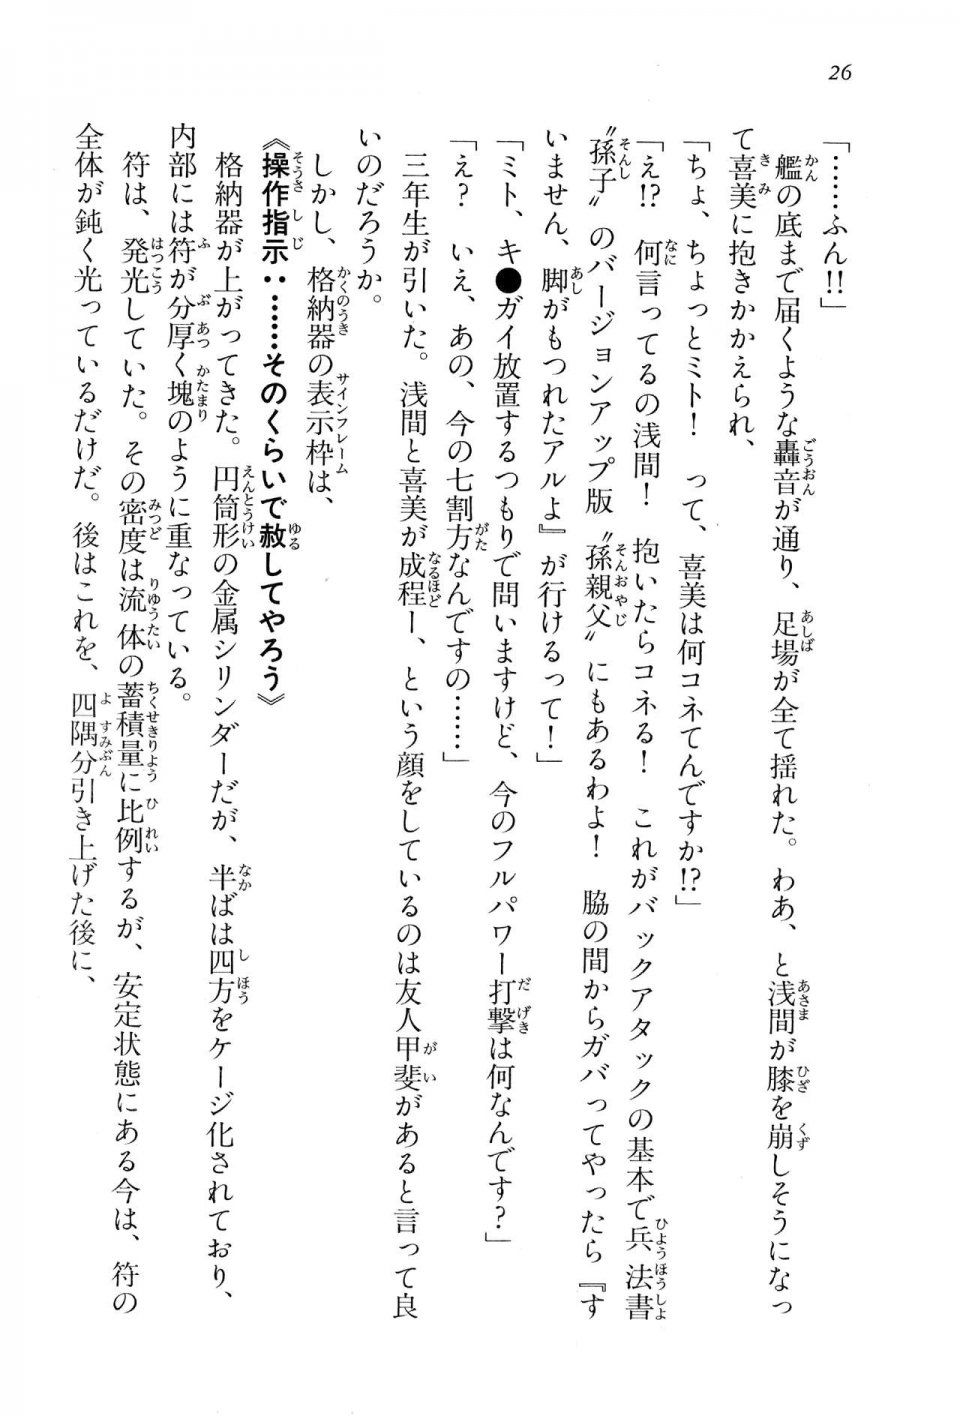 Kyoukai Senjou no Horizon BD Special Mininovel Vol 1(1A) - Photo #30